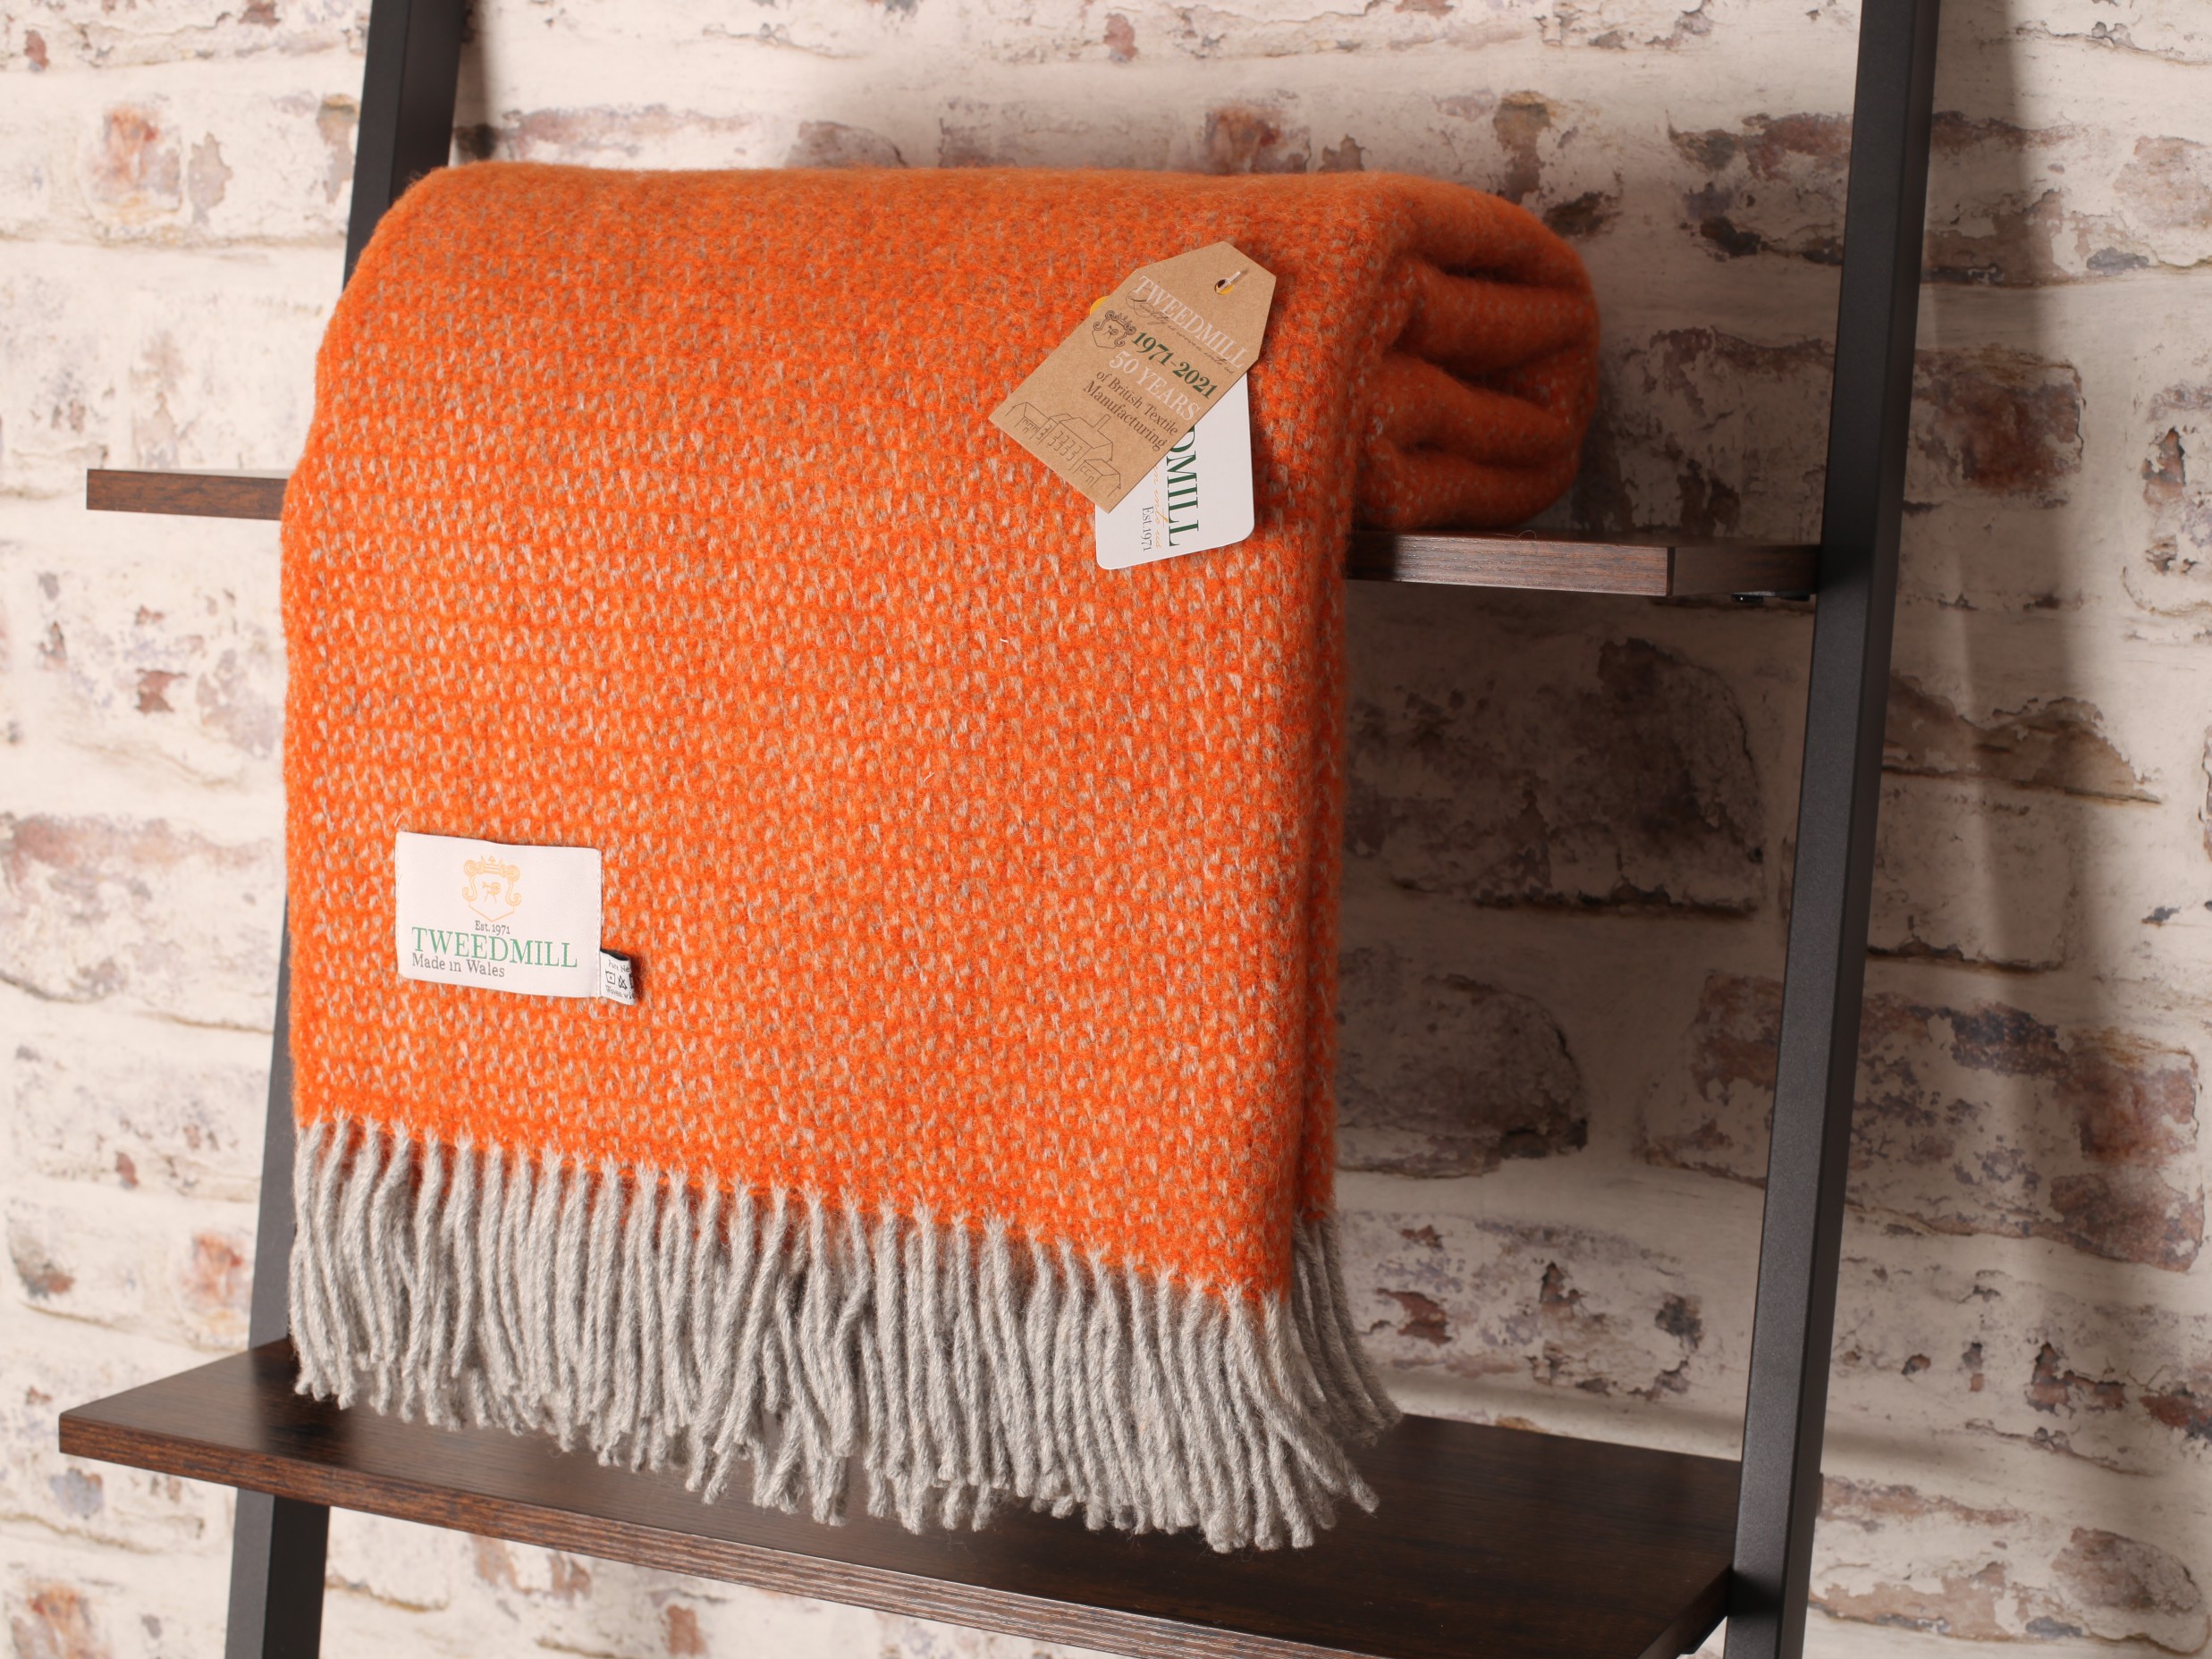 tweedmill orange and grey throw blanket